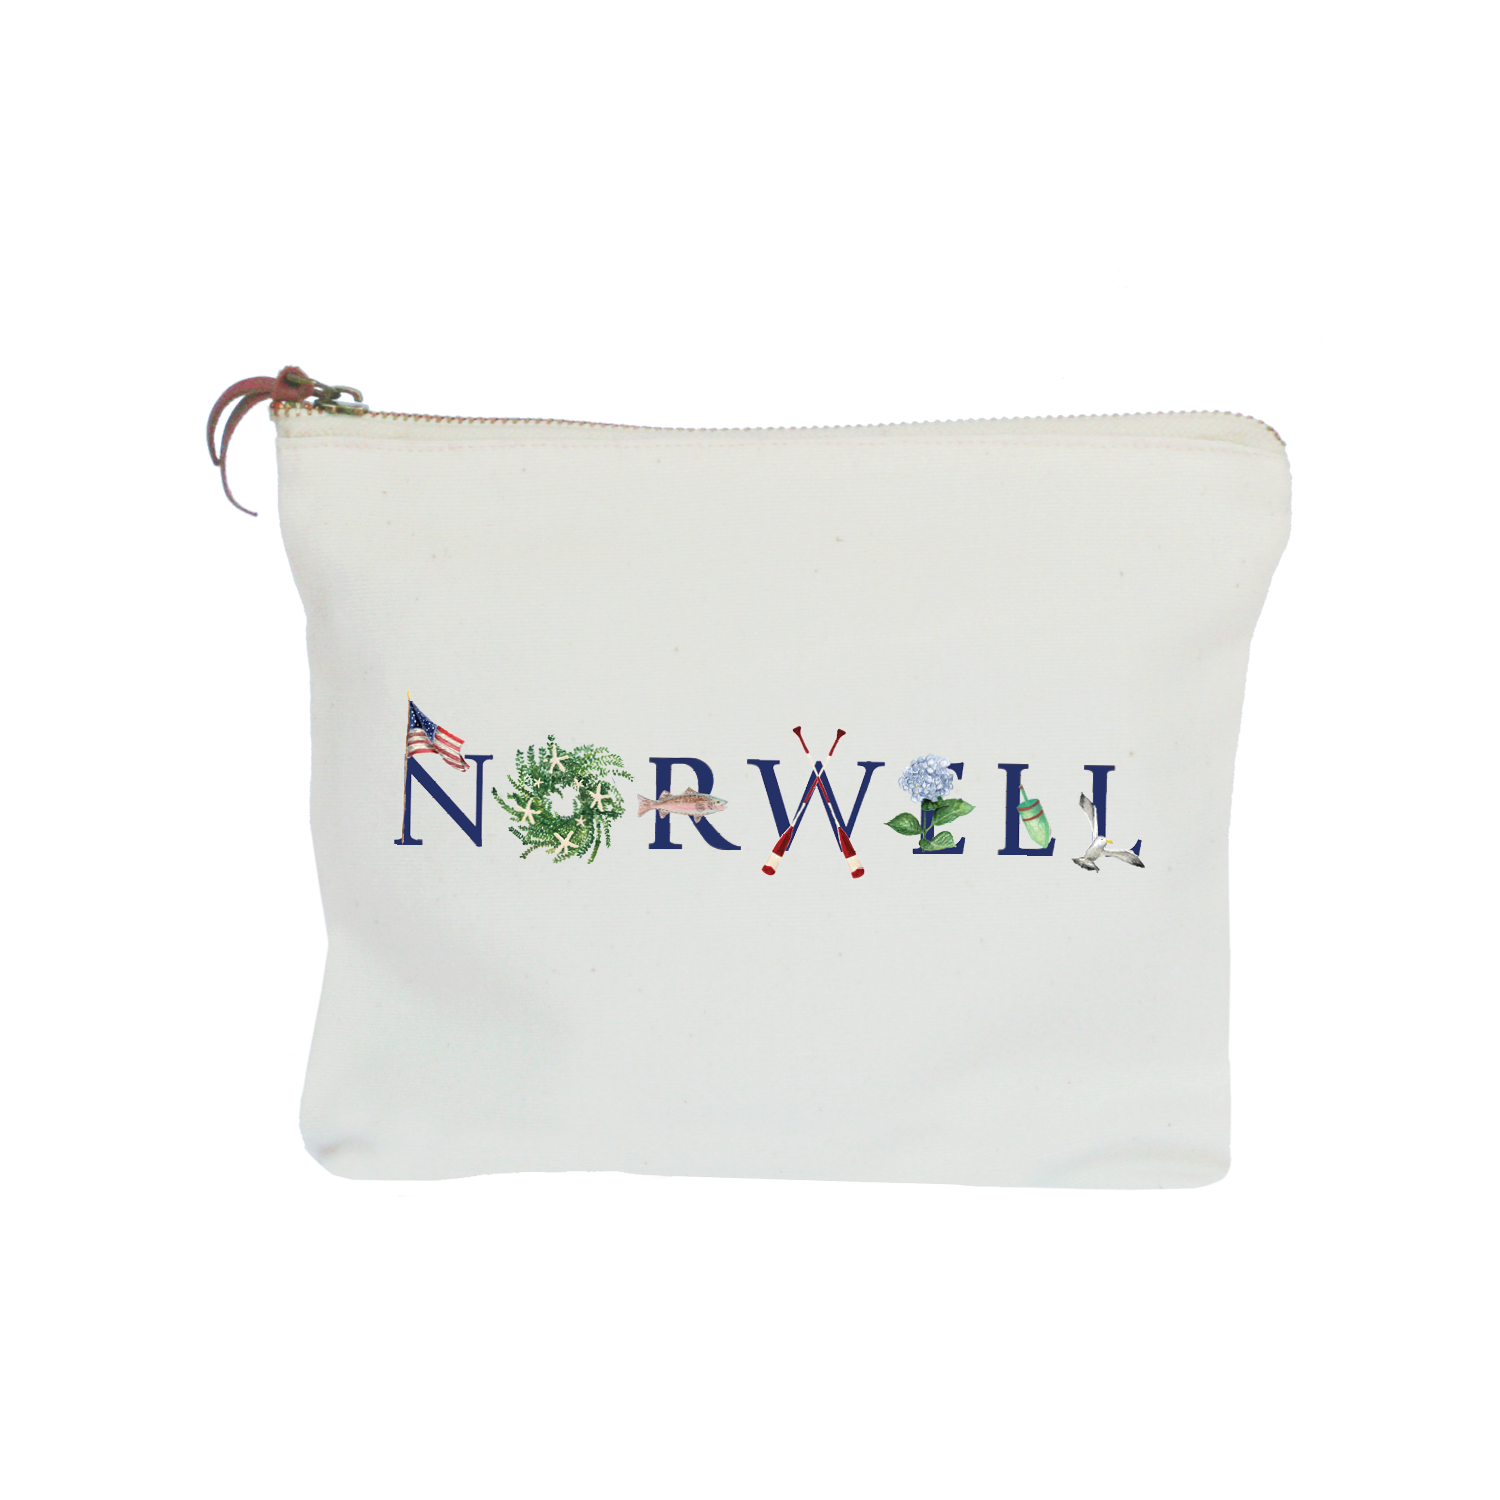 Norwell zipper pouch